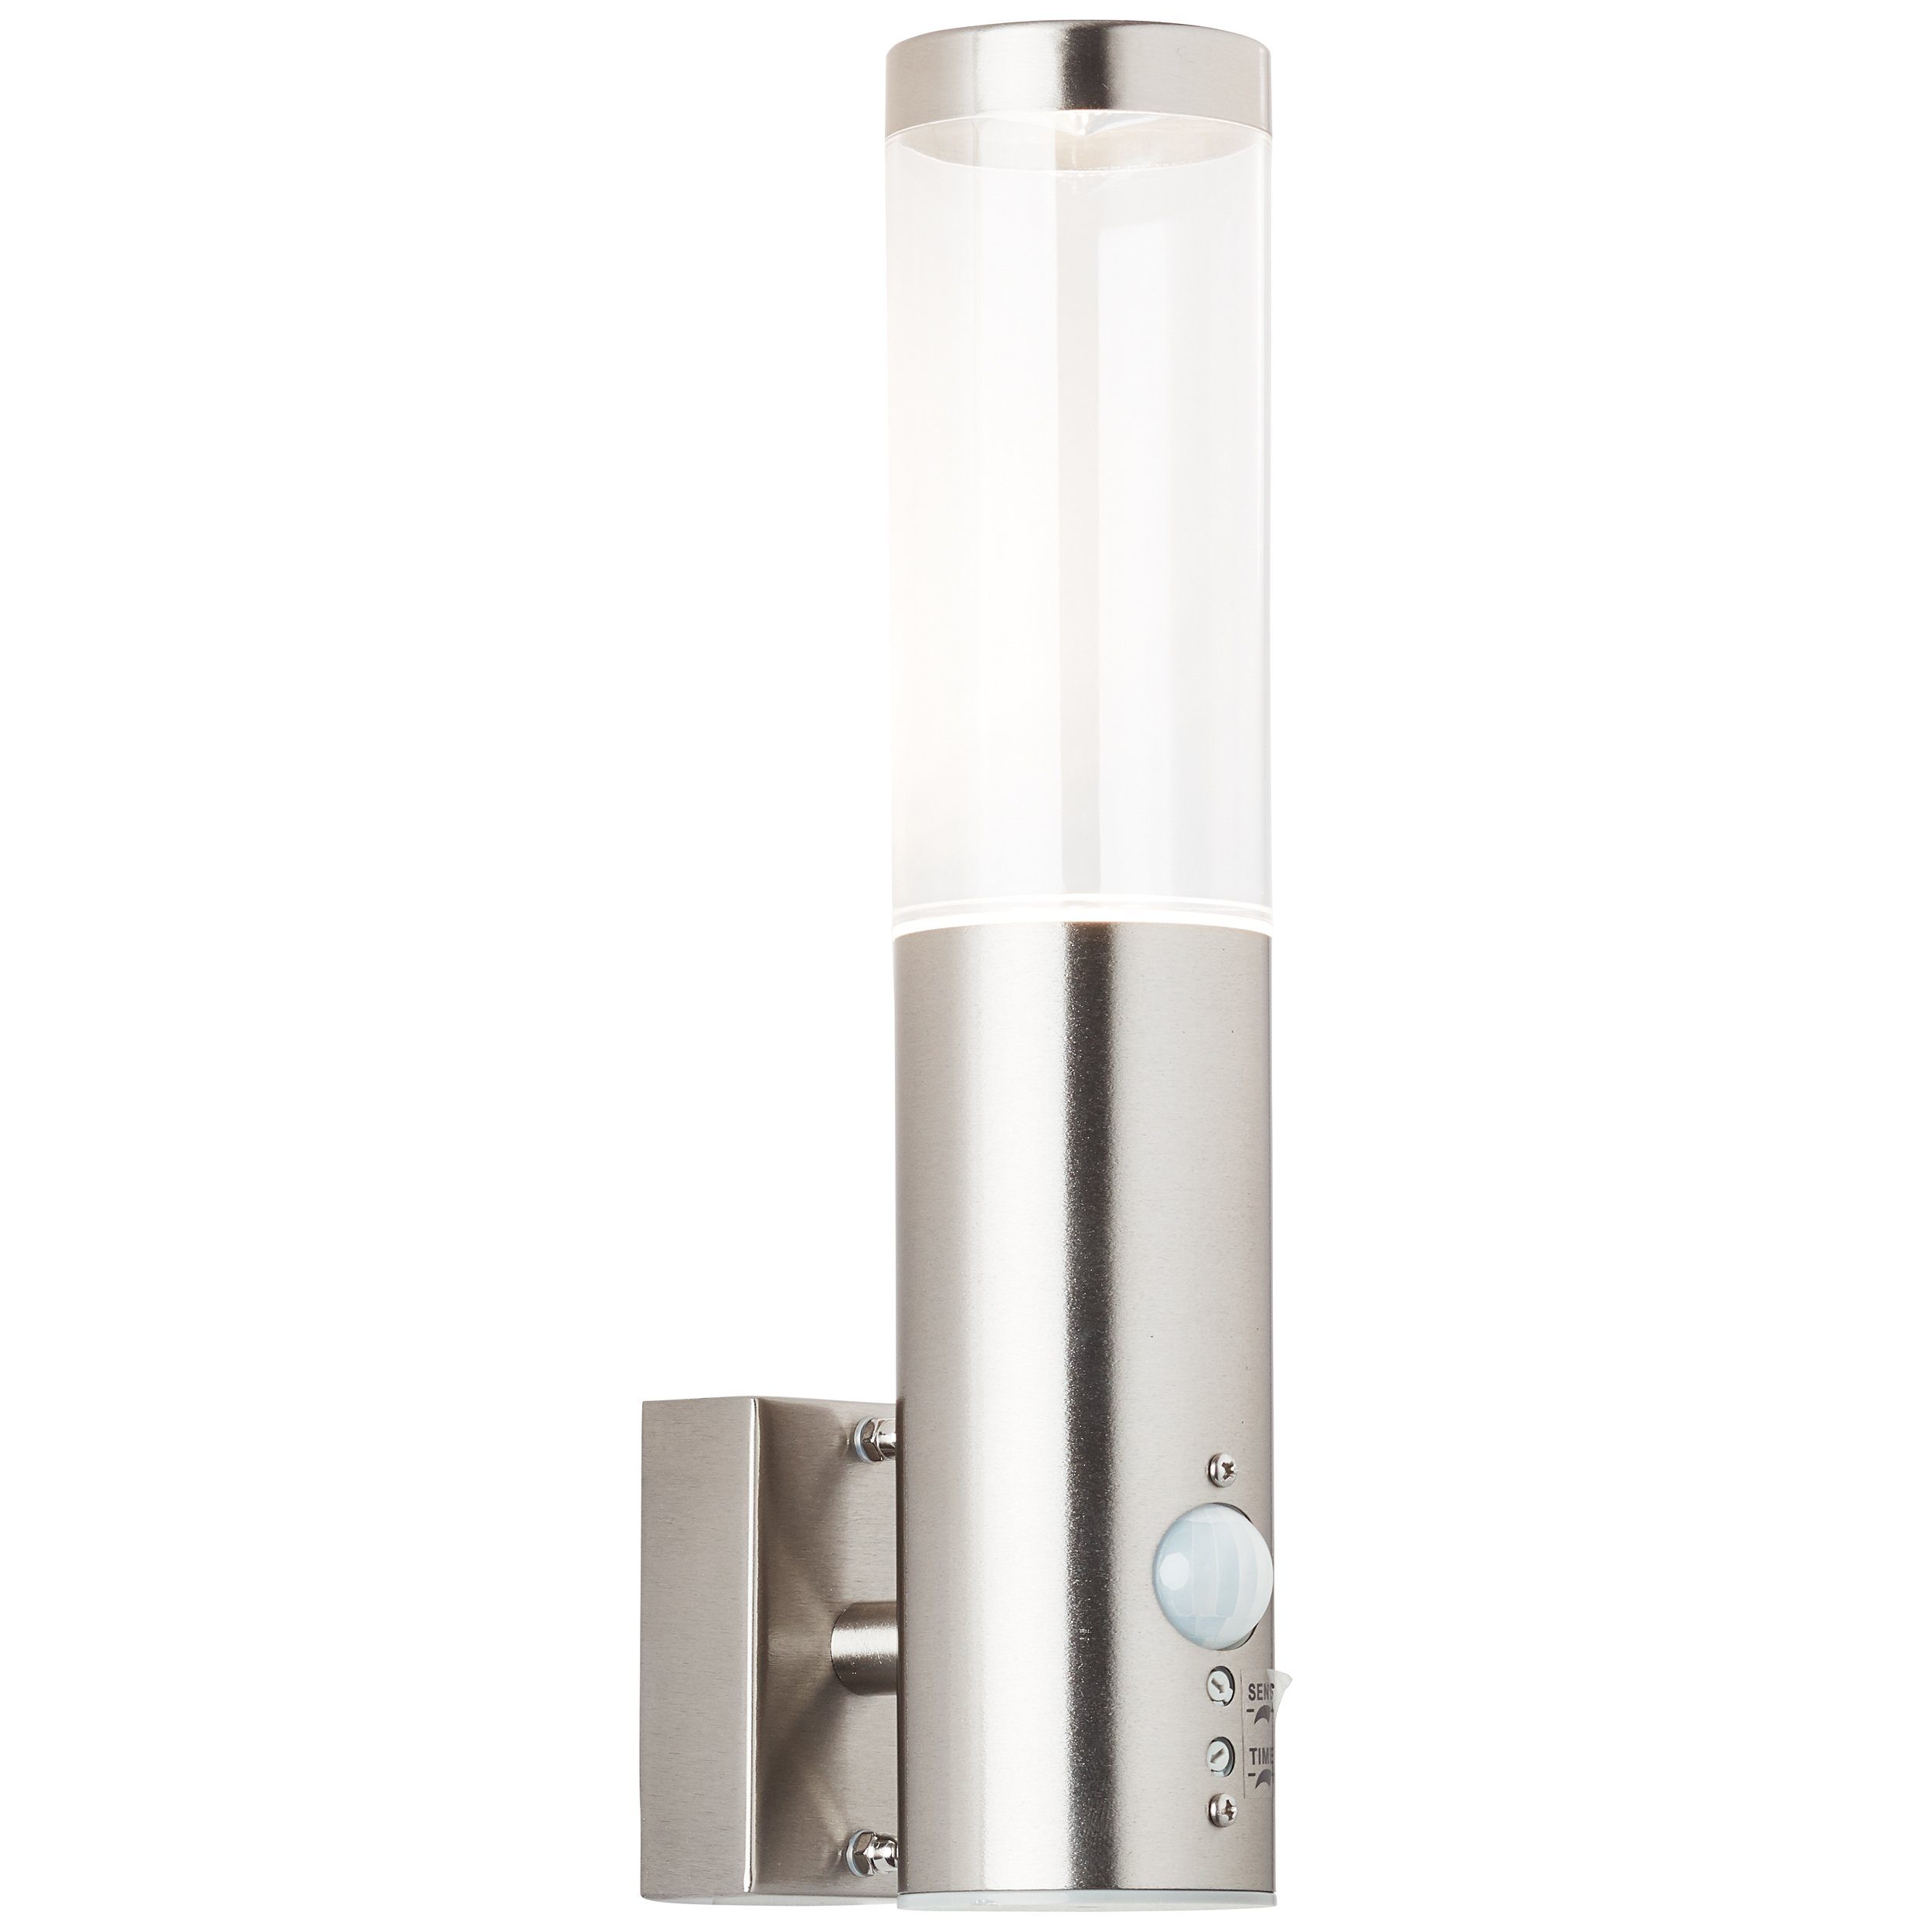 Wandlampe, LED 29 350 cm lm, LED GU10, wechselbar, Außen Bewegungsmelder, Bewegungsmelder, Lightbox Wandleuchte, IP44 kaltweiß, Höhe, LED